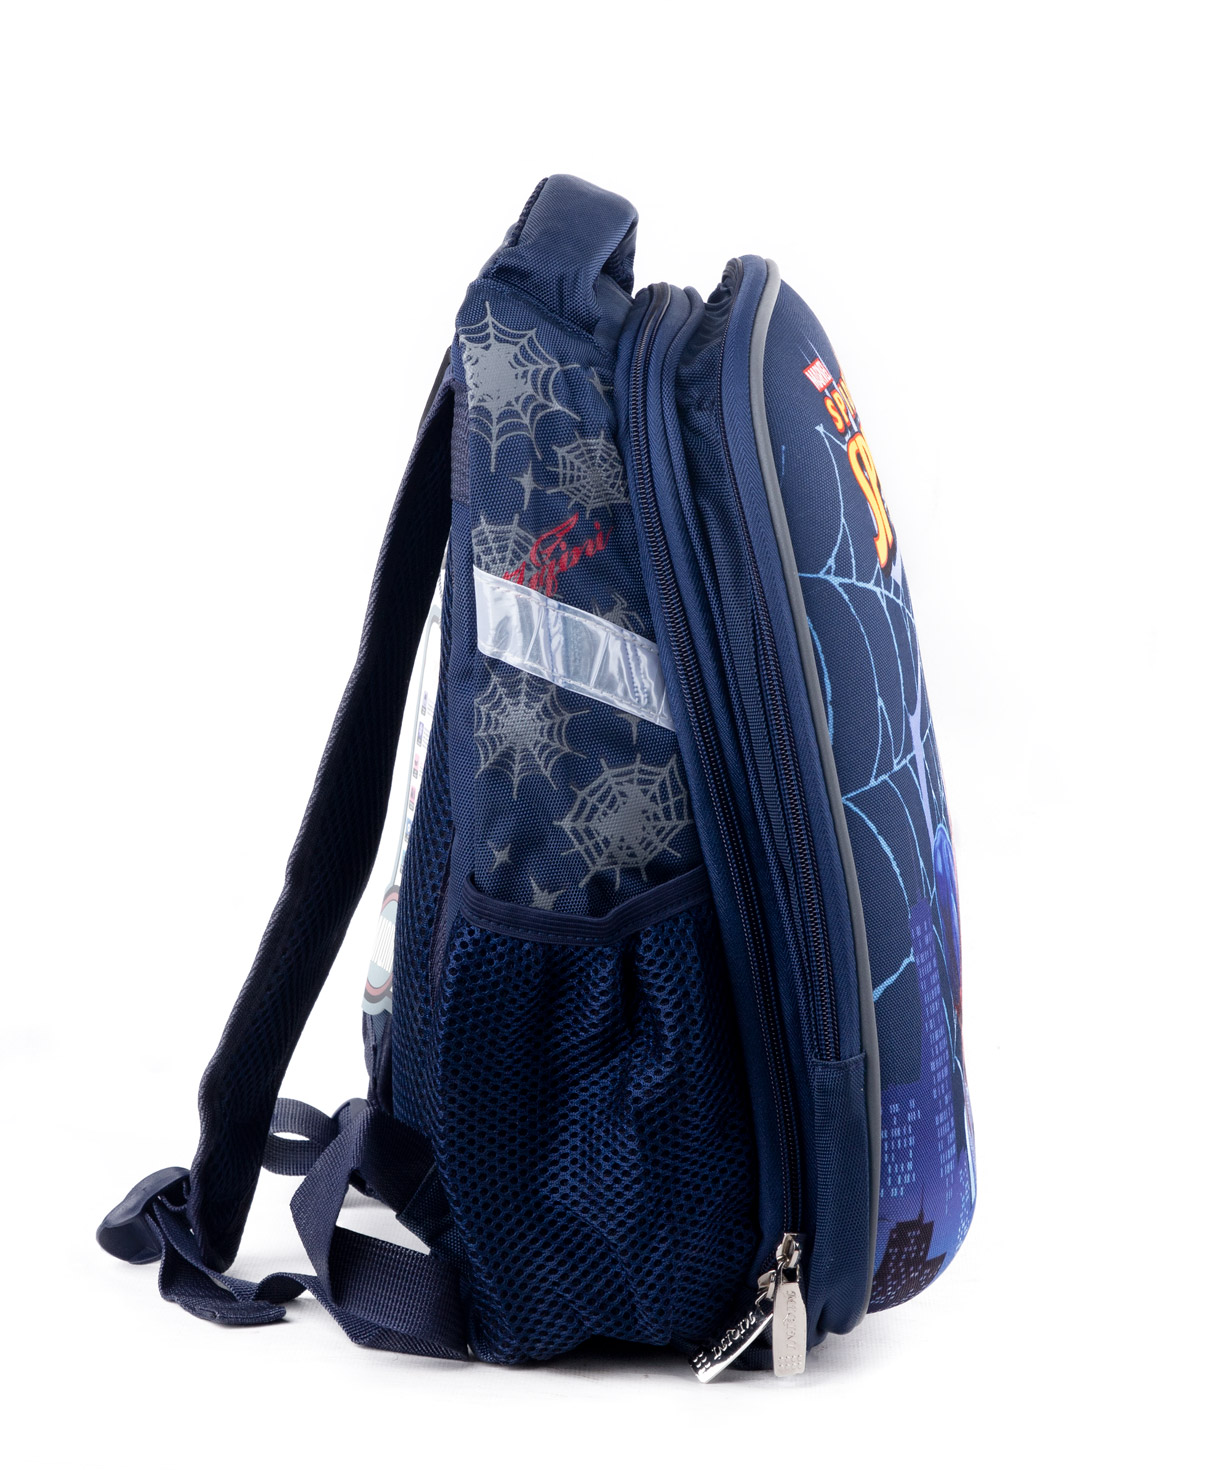 School bag №46